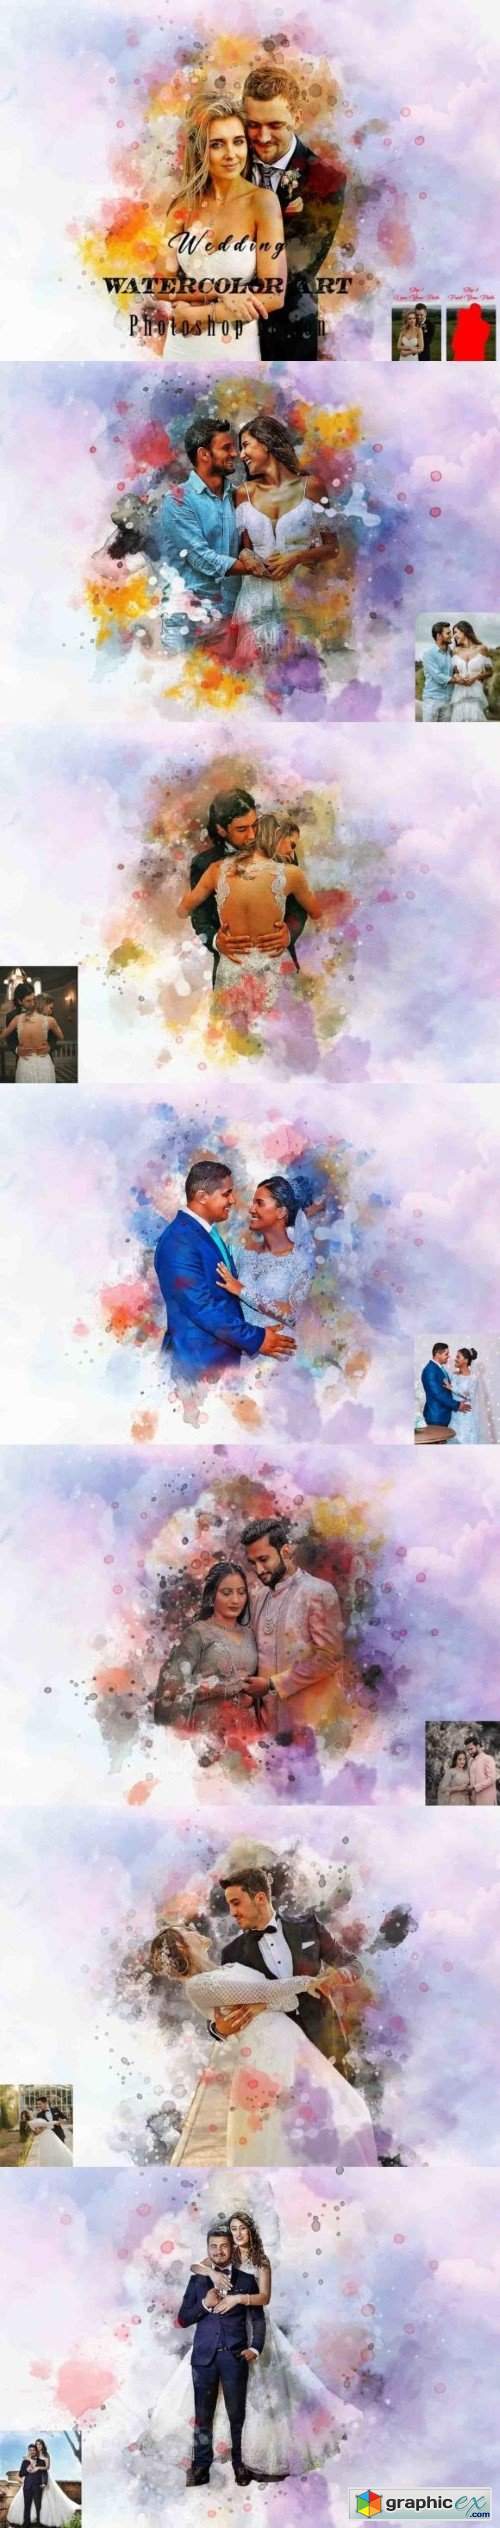 Wedding Watercolor Art Photoshop Action 